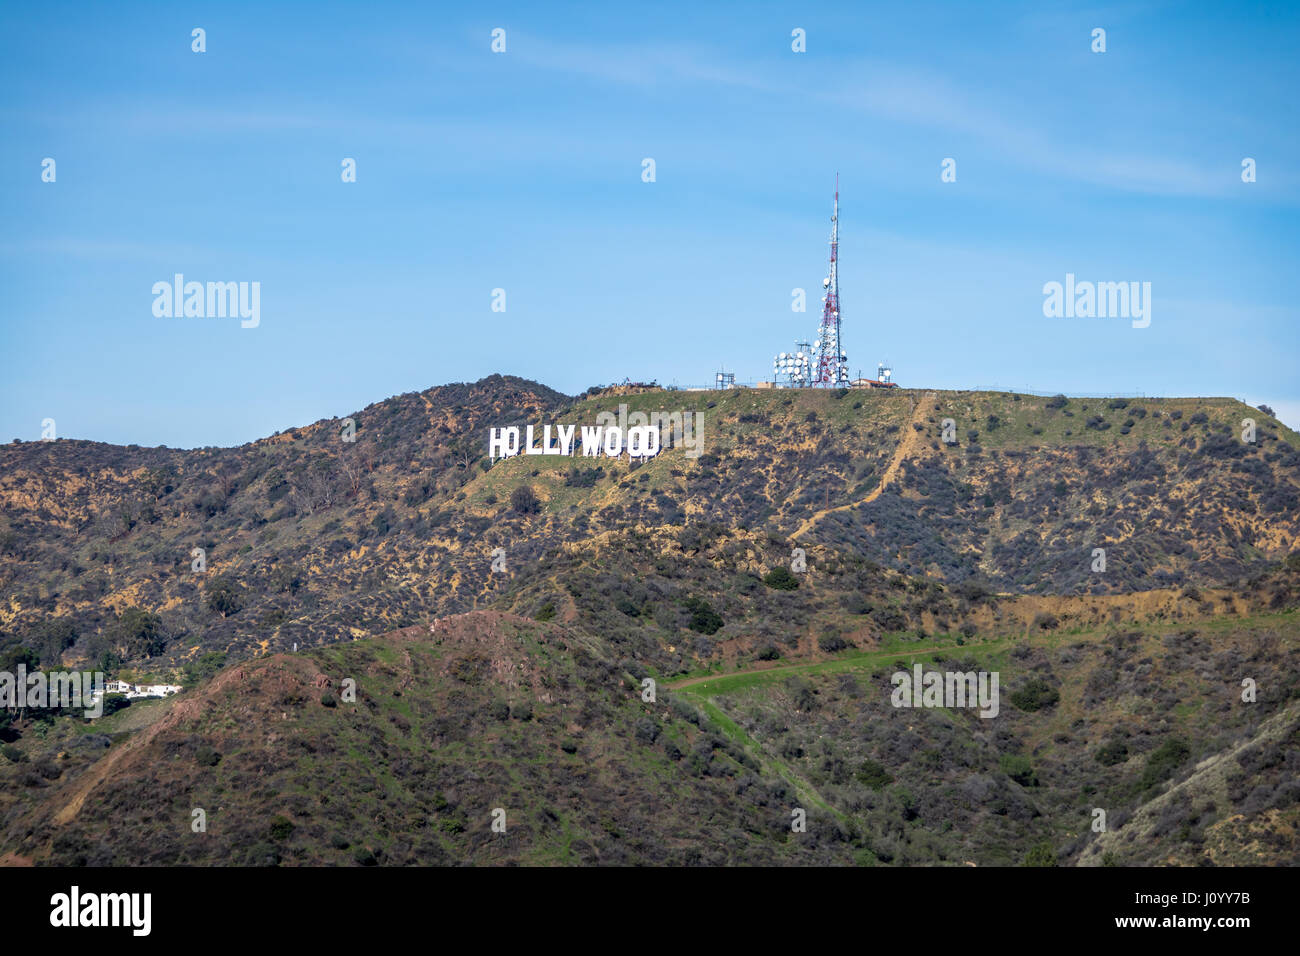 Hollywood-Schild - Los Angeles, Kalifornien, USA Stockfoto